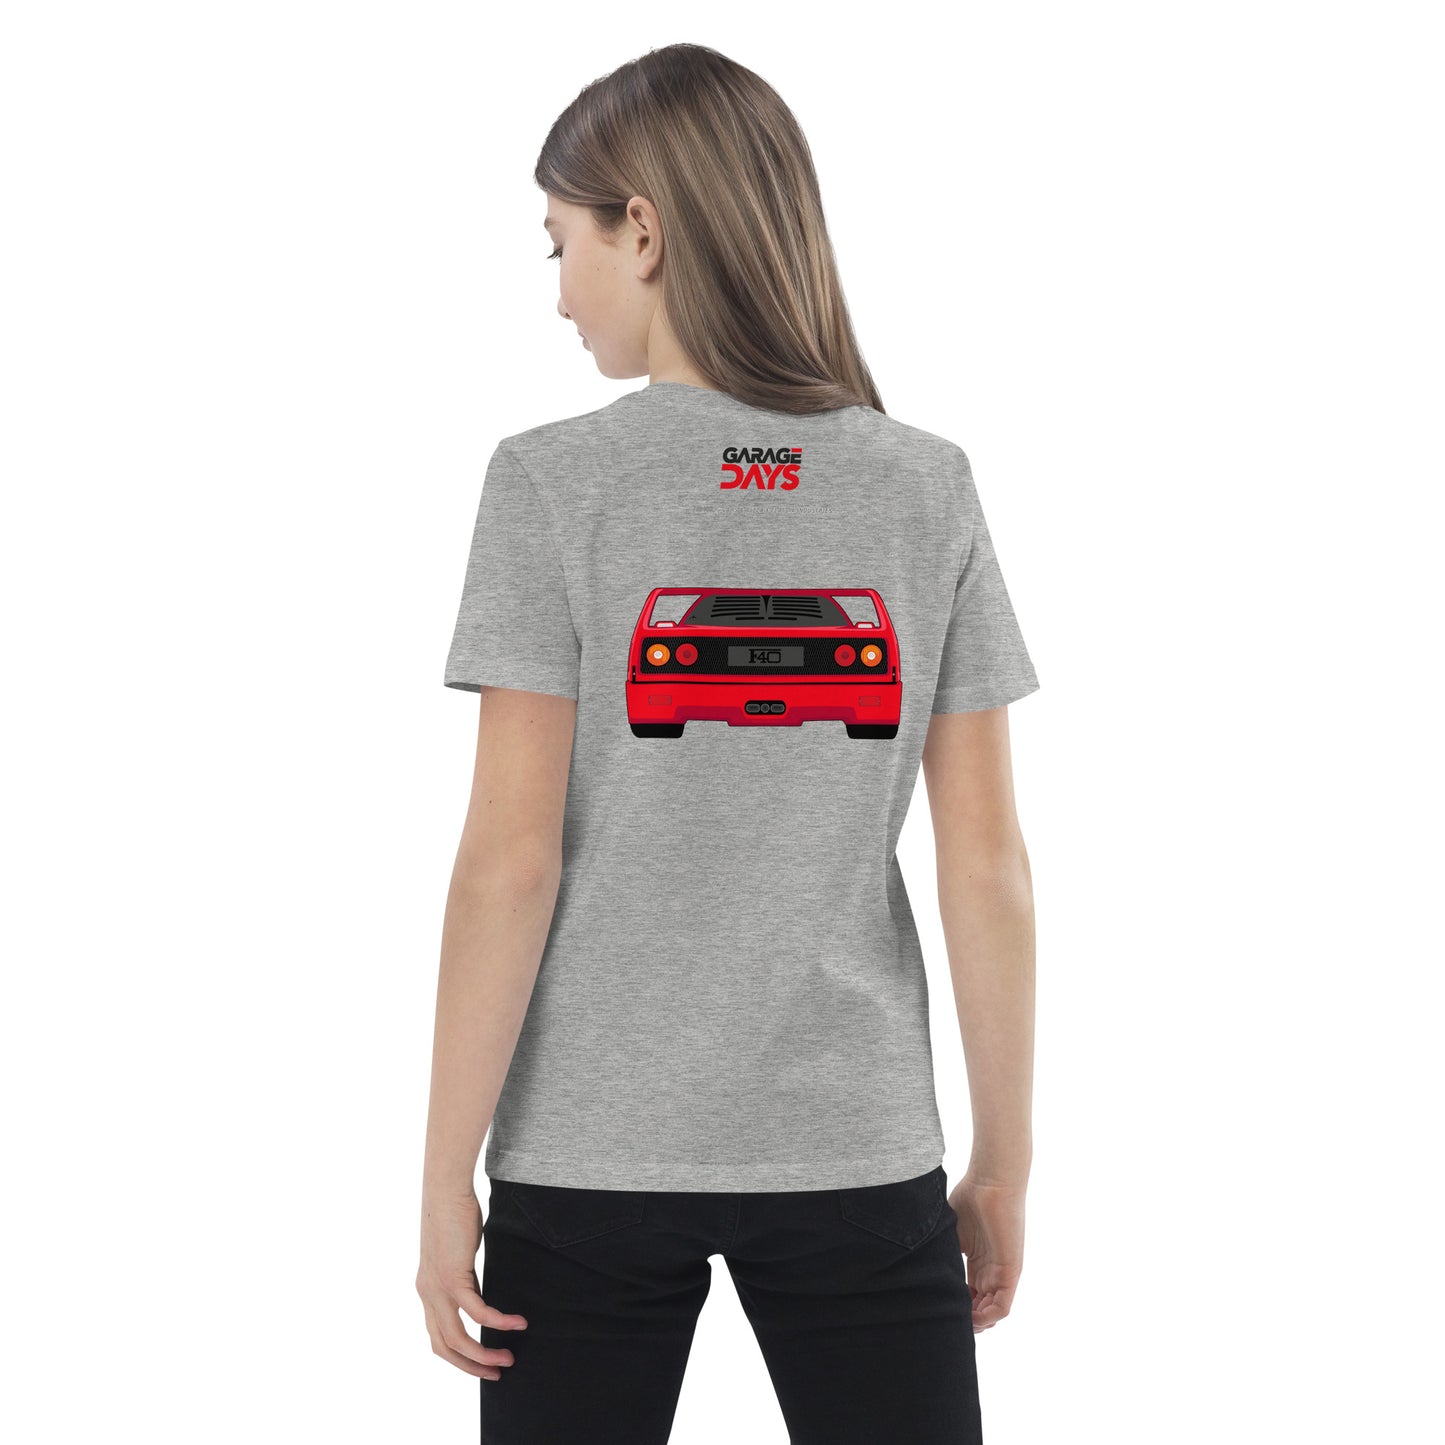 Camiseta kids unisex Ferrari F40 "Garage Days" 1 of 100